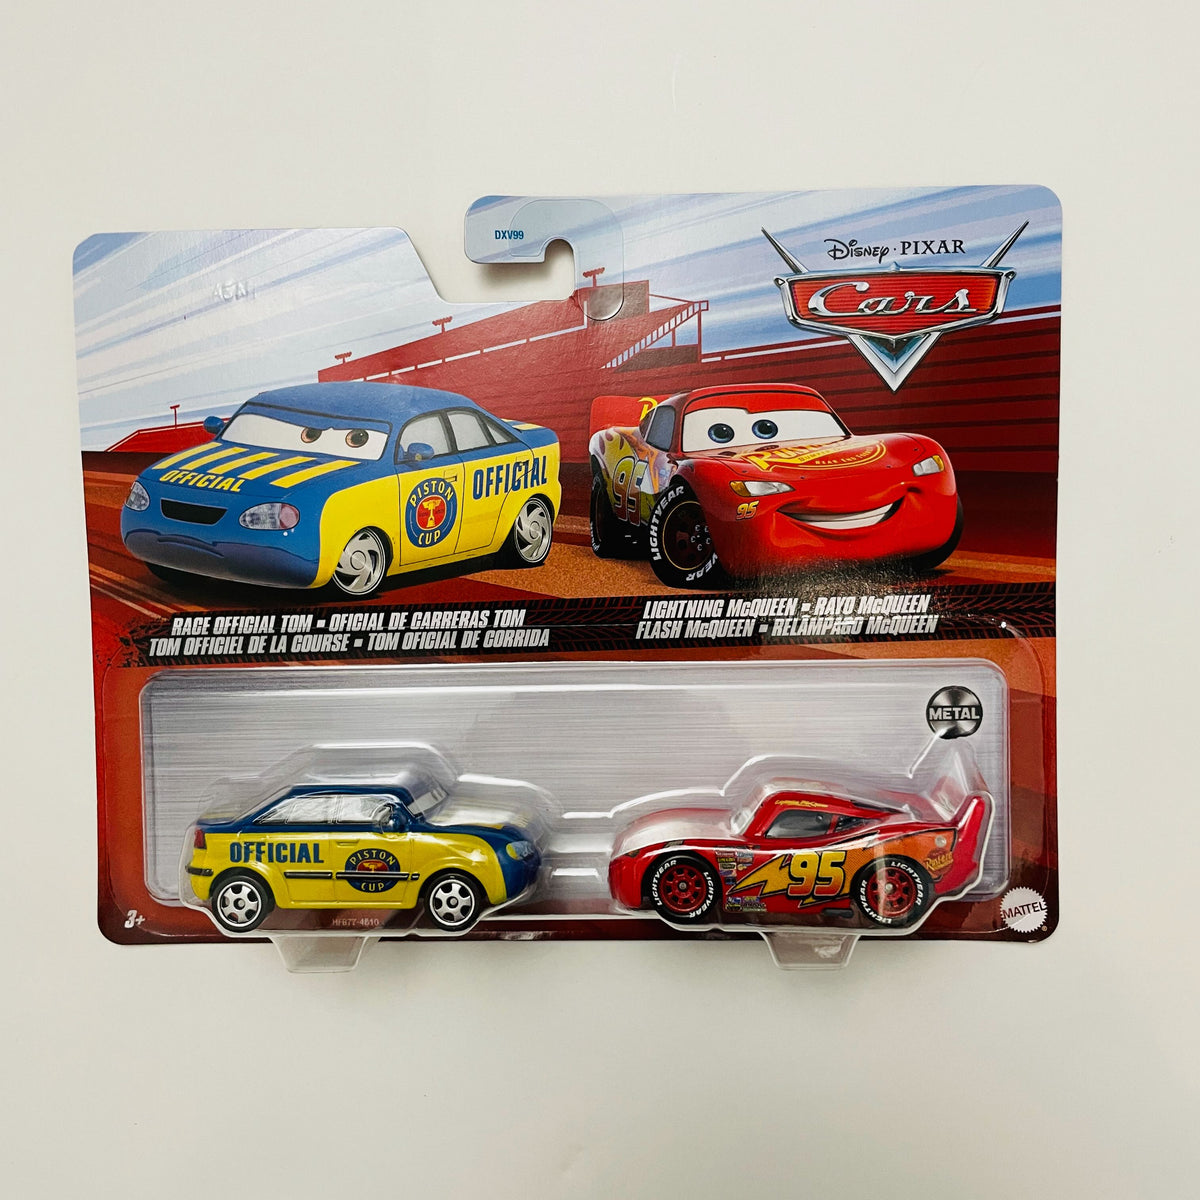 Disney Pixar The World of Cars Race Official Tom & Lightning McQueen 2 Pack